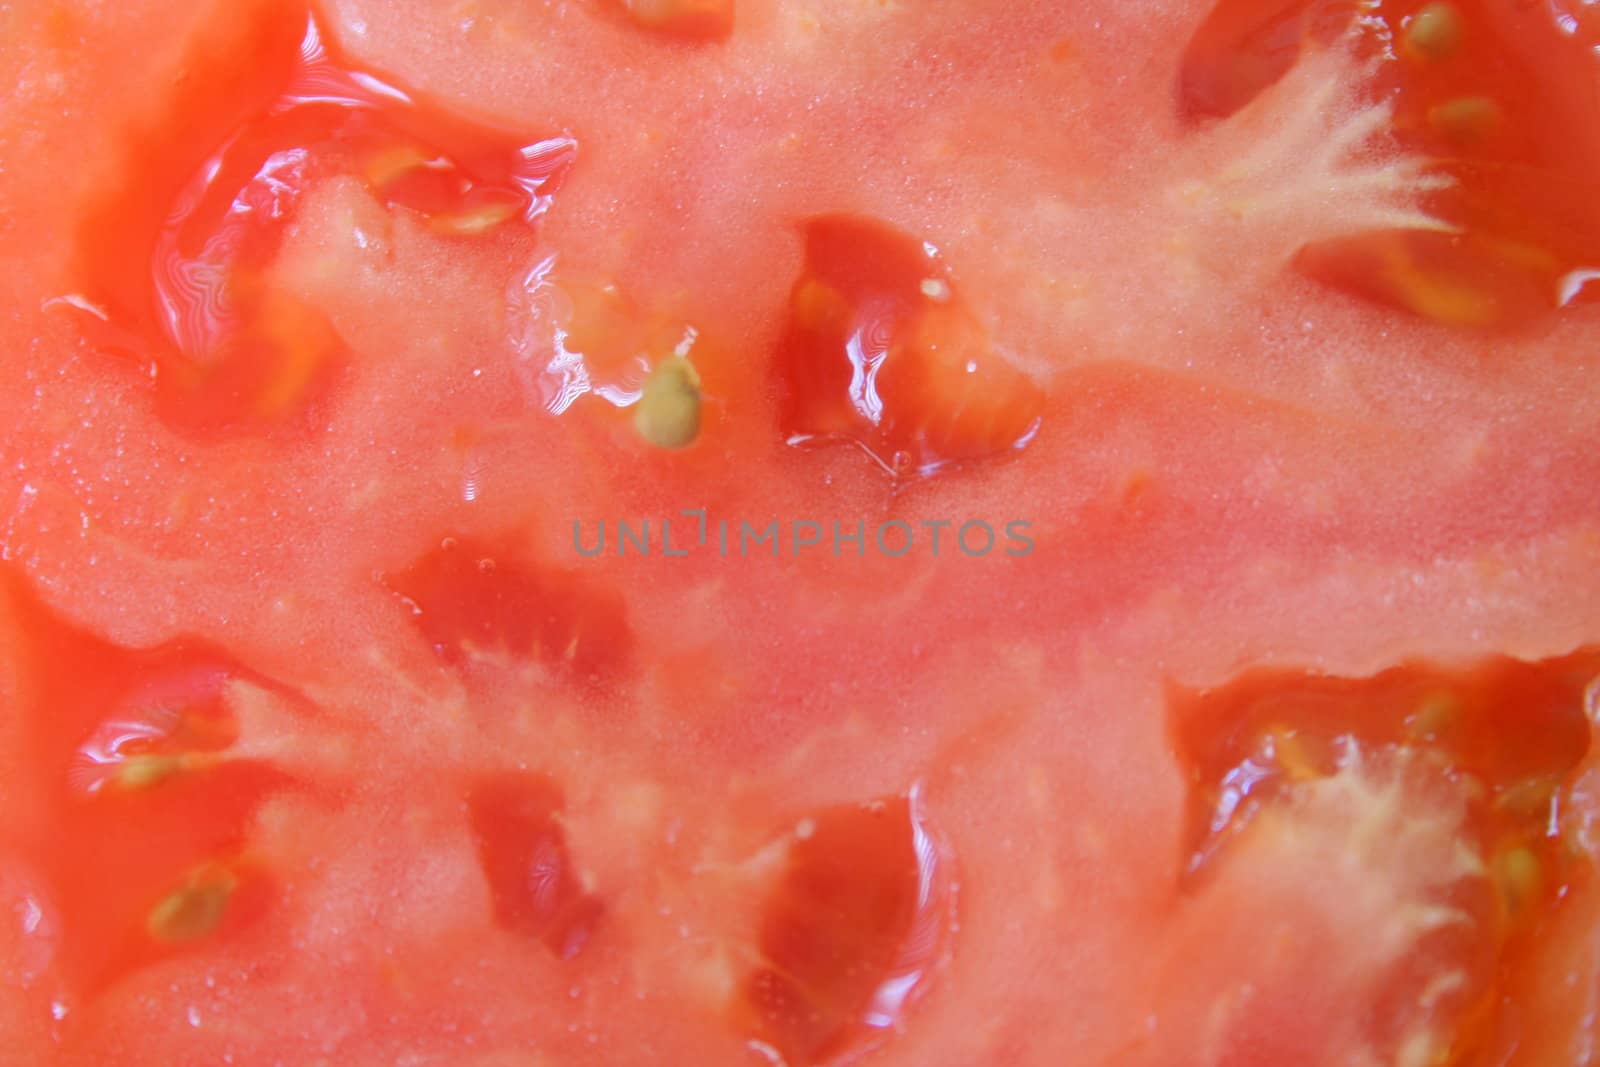 close up of a tomato

